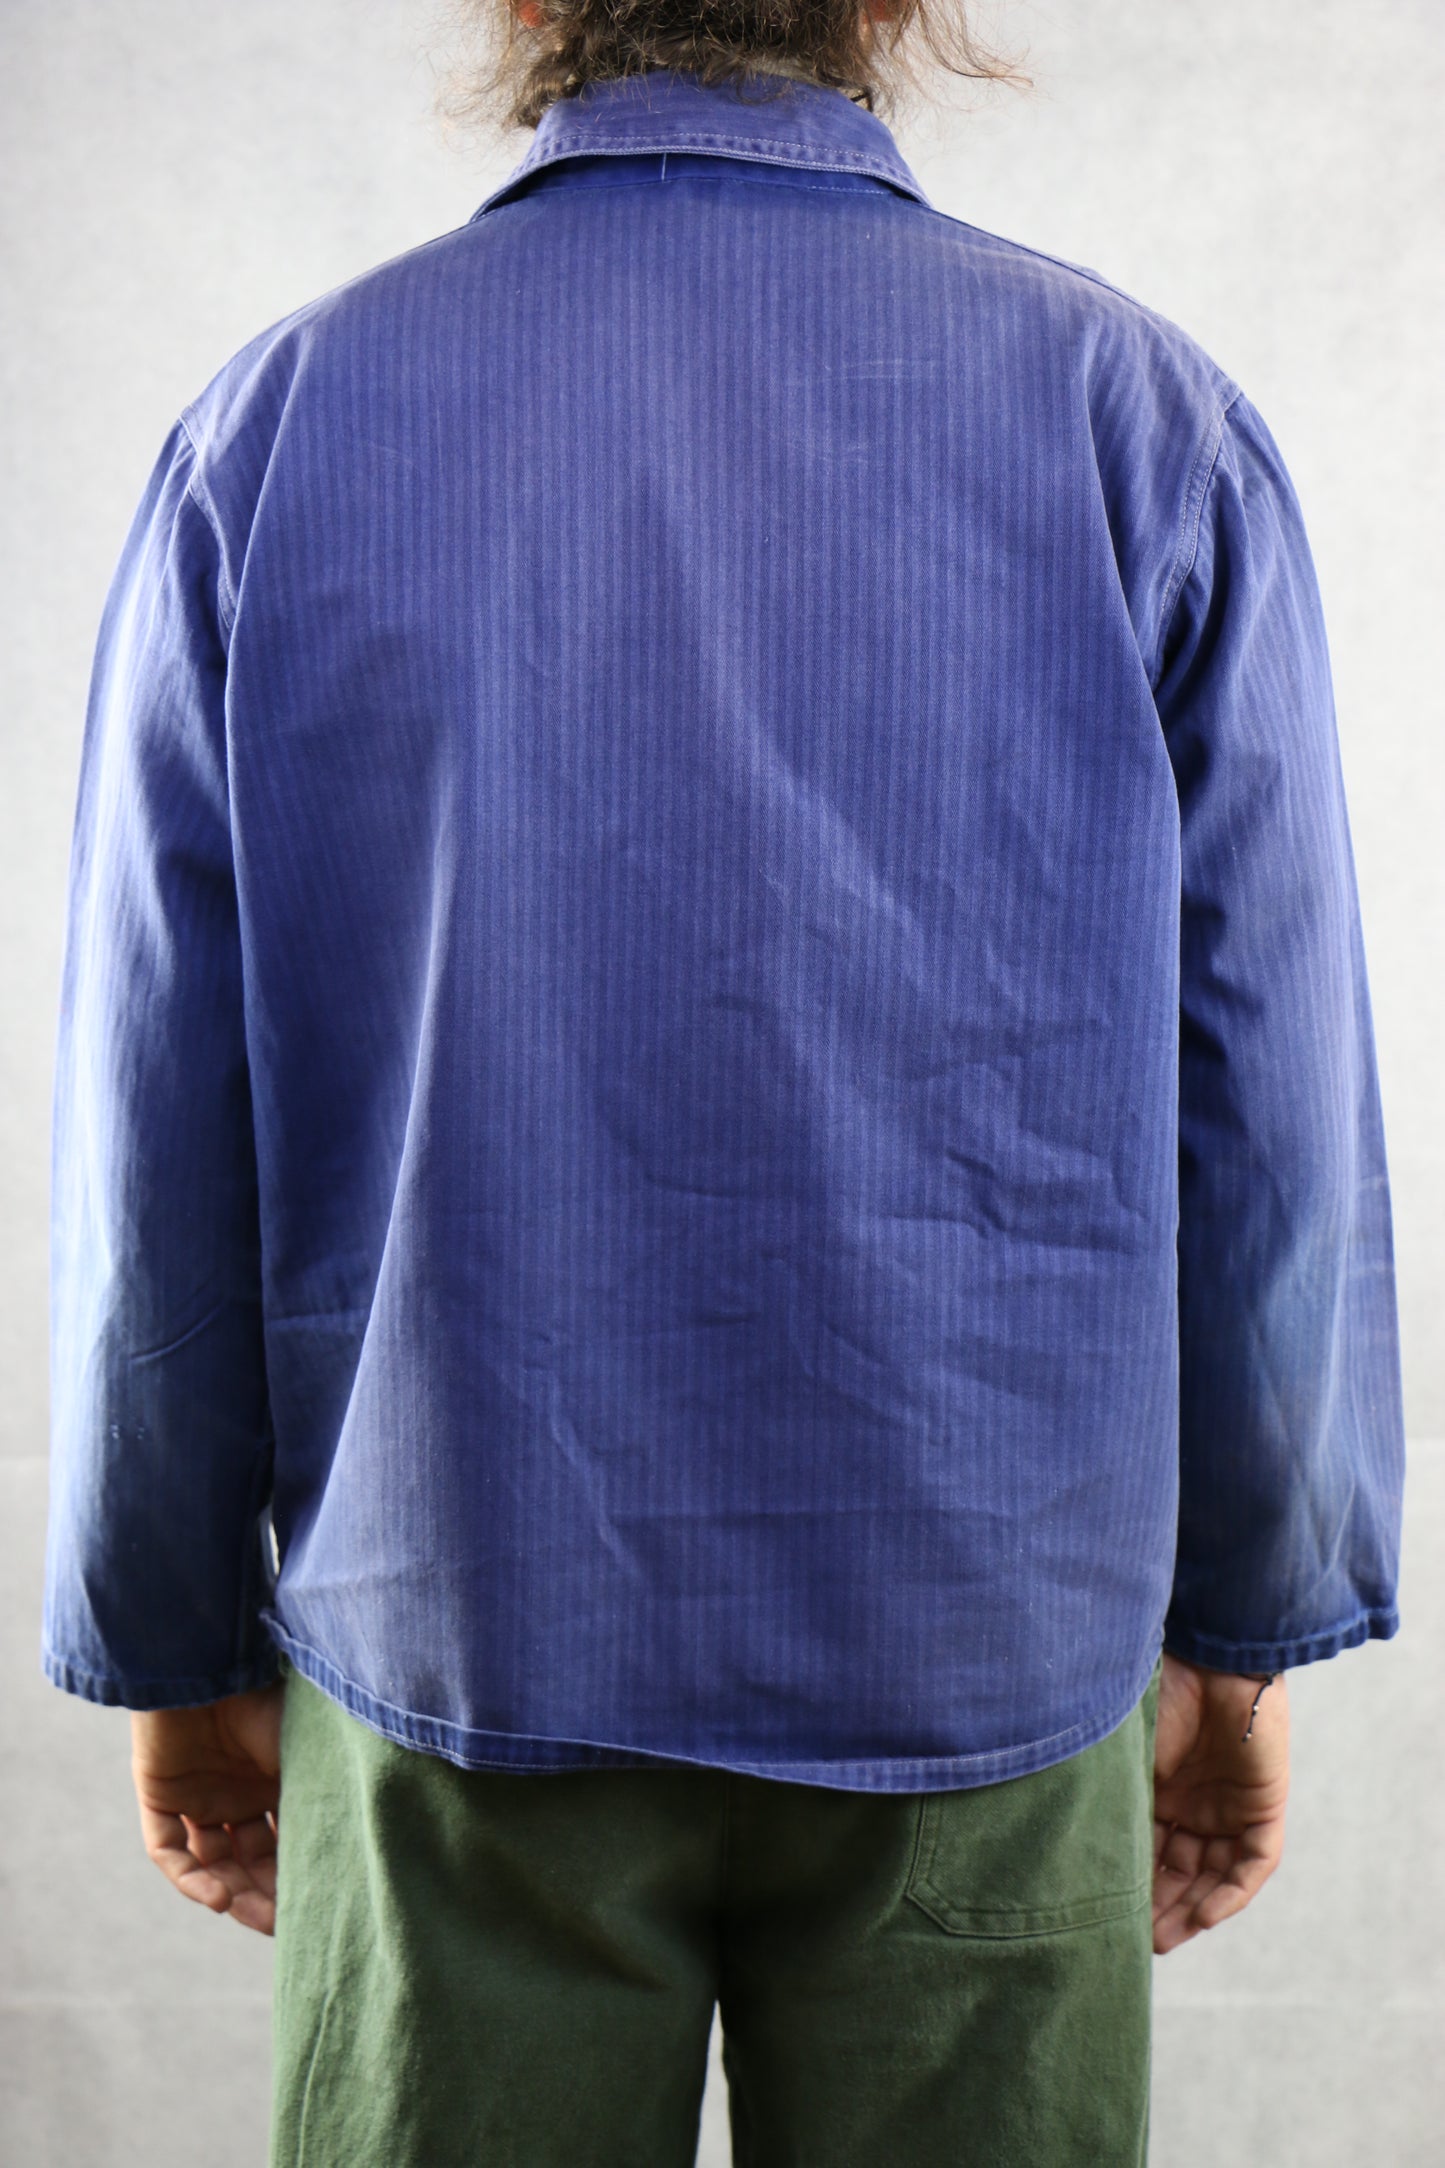 Work Jacket Faded XL/56 - vintage clothing clochard92.com